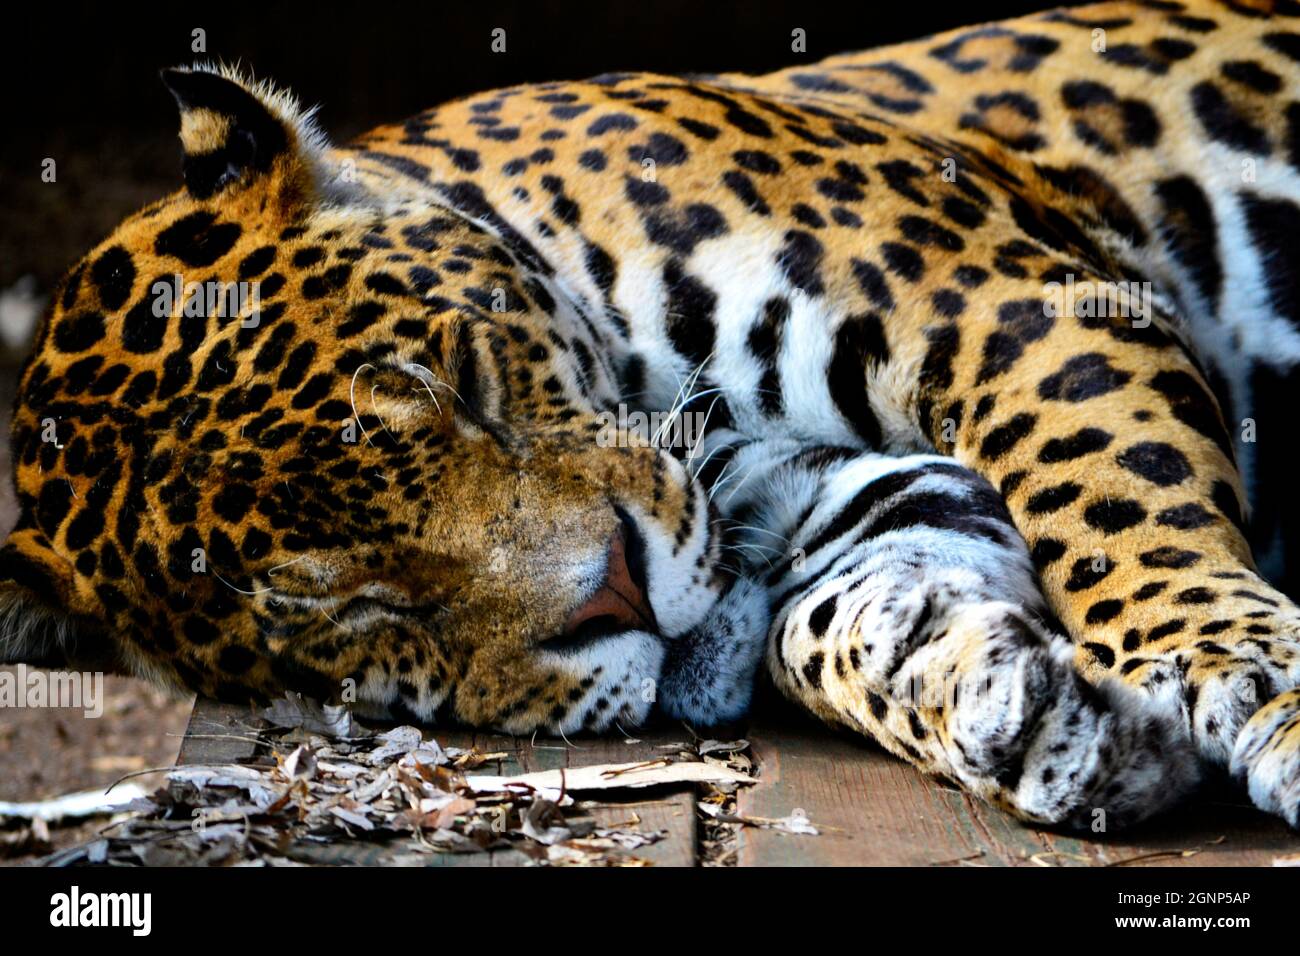 Sleeping jaguar Stock Photo